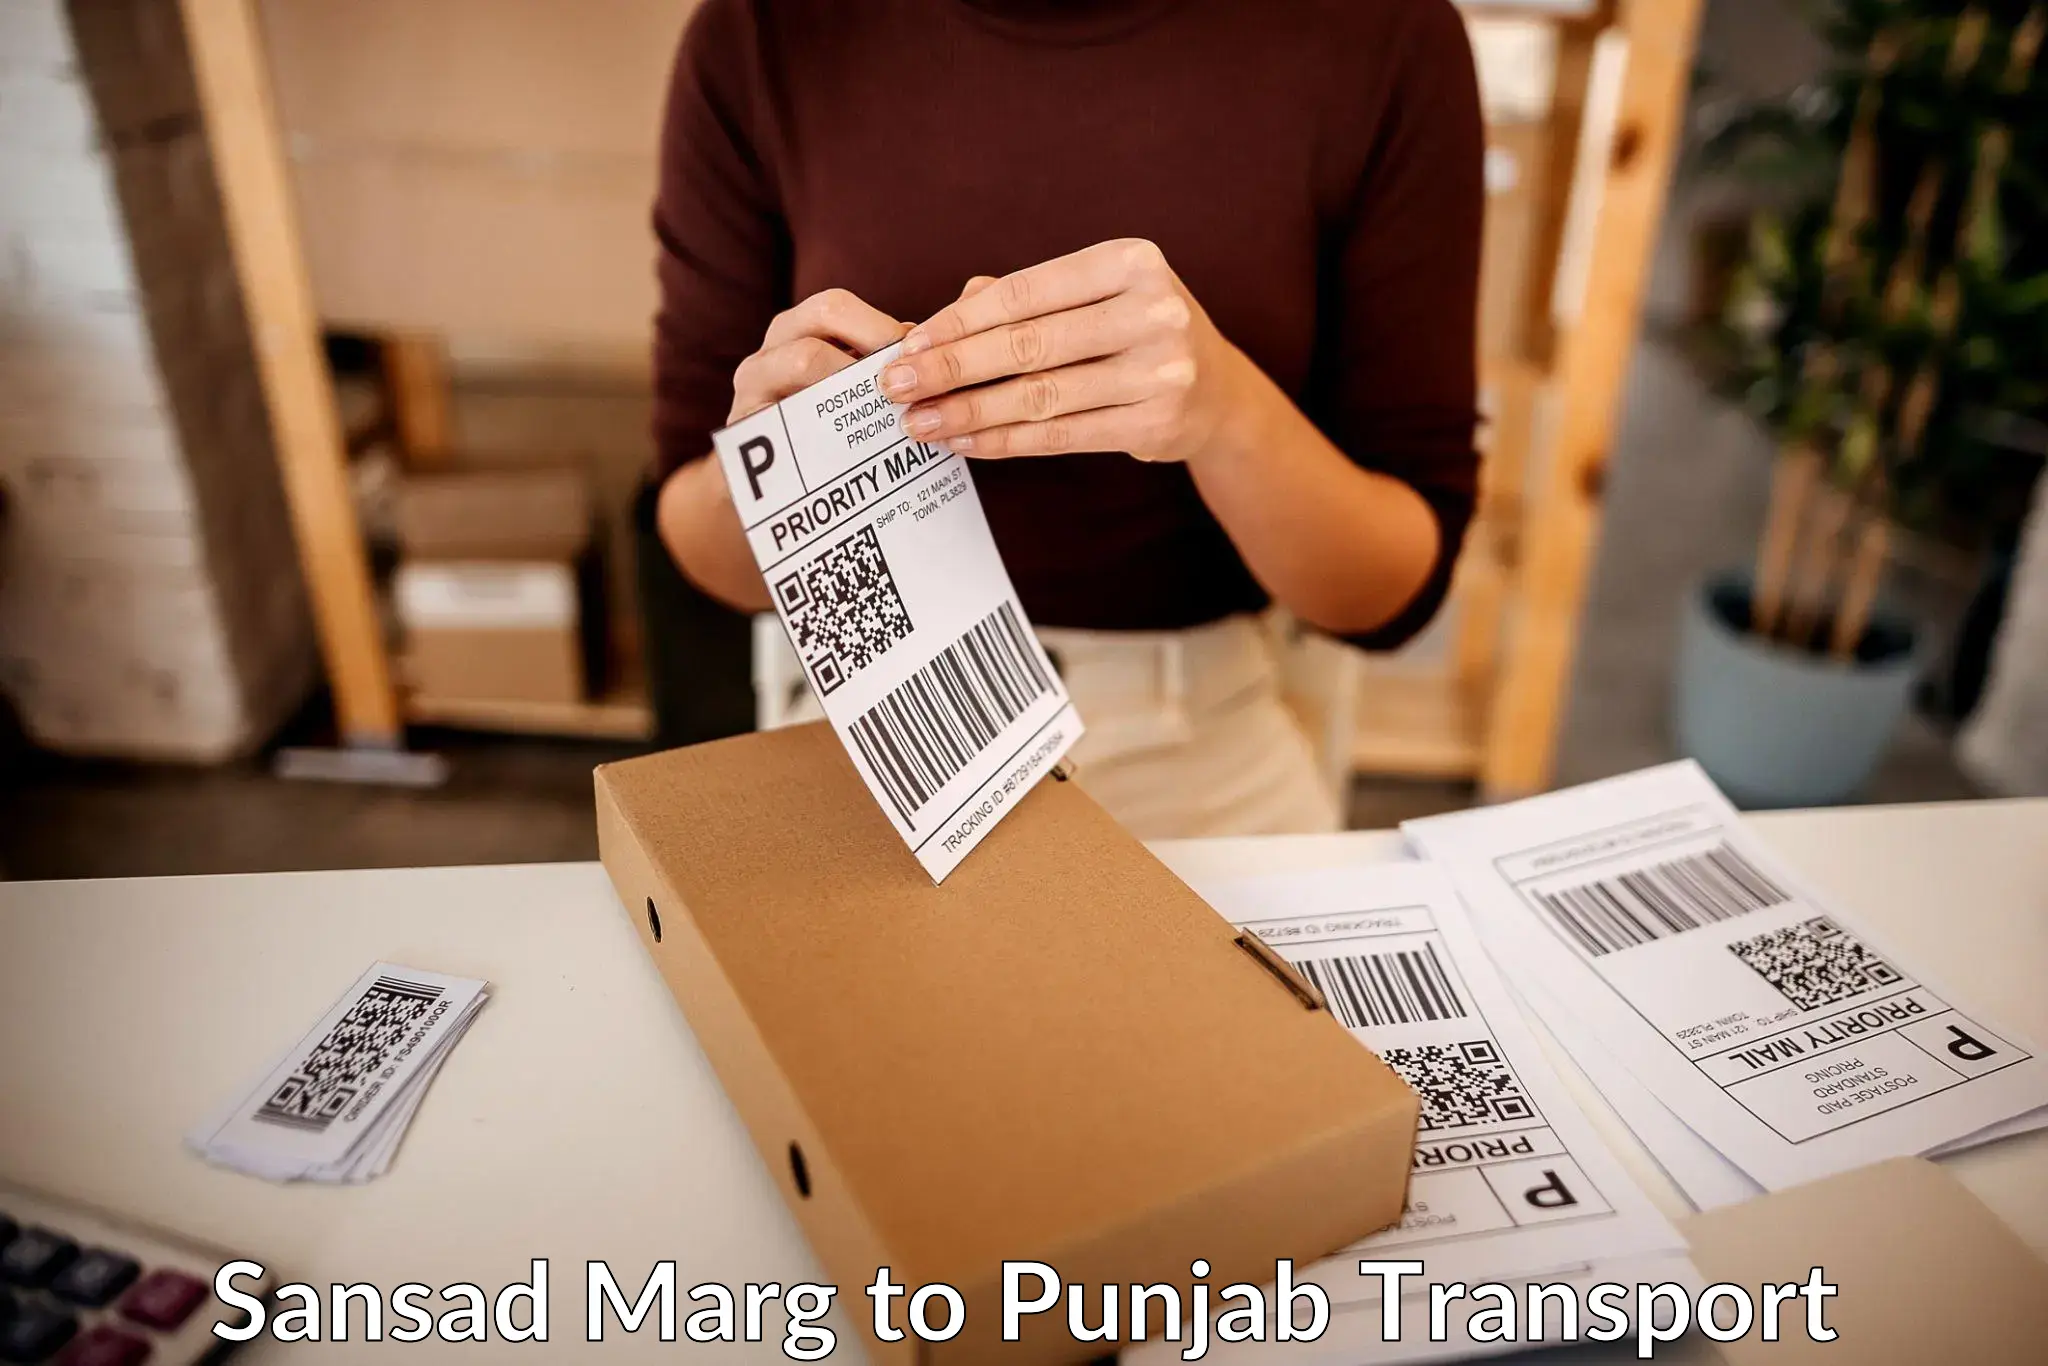 Shipping partner in Sansad Marg to Ludhiana